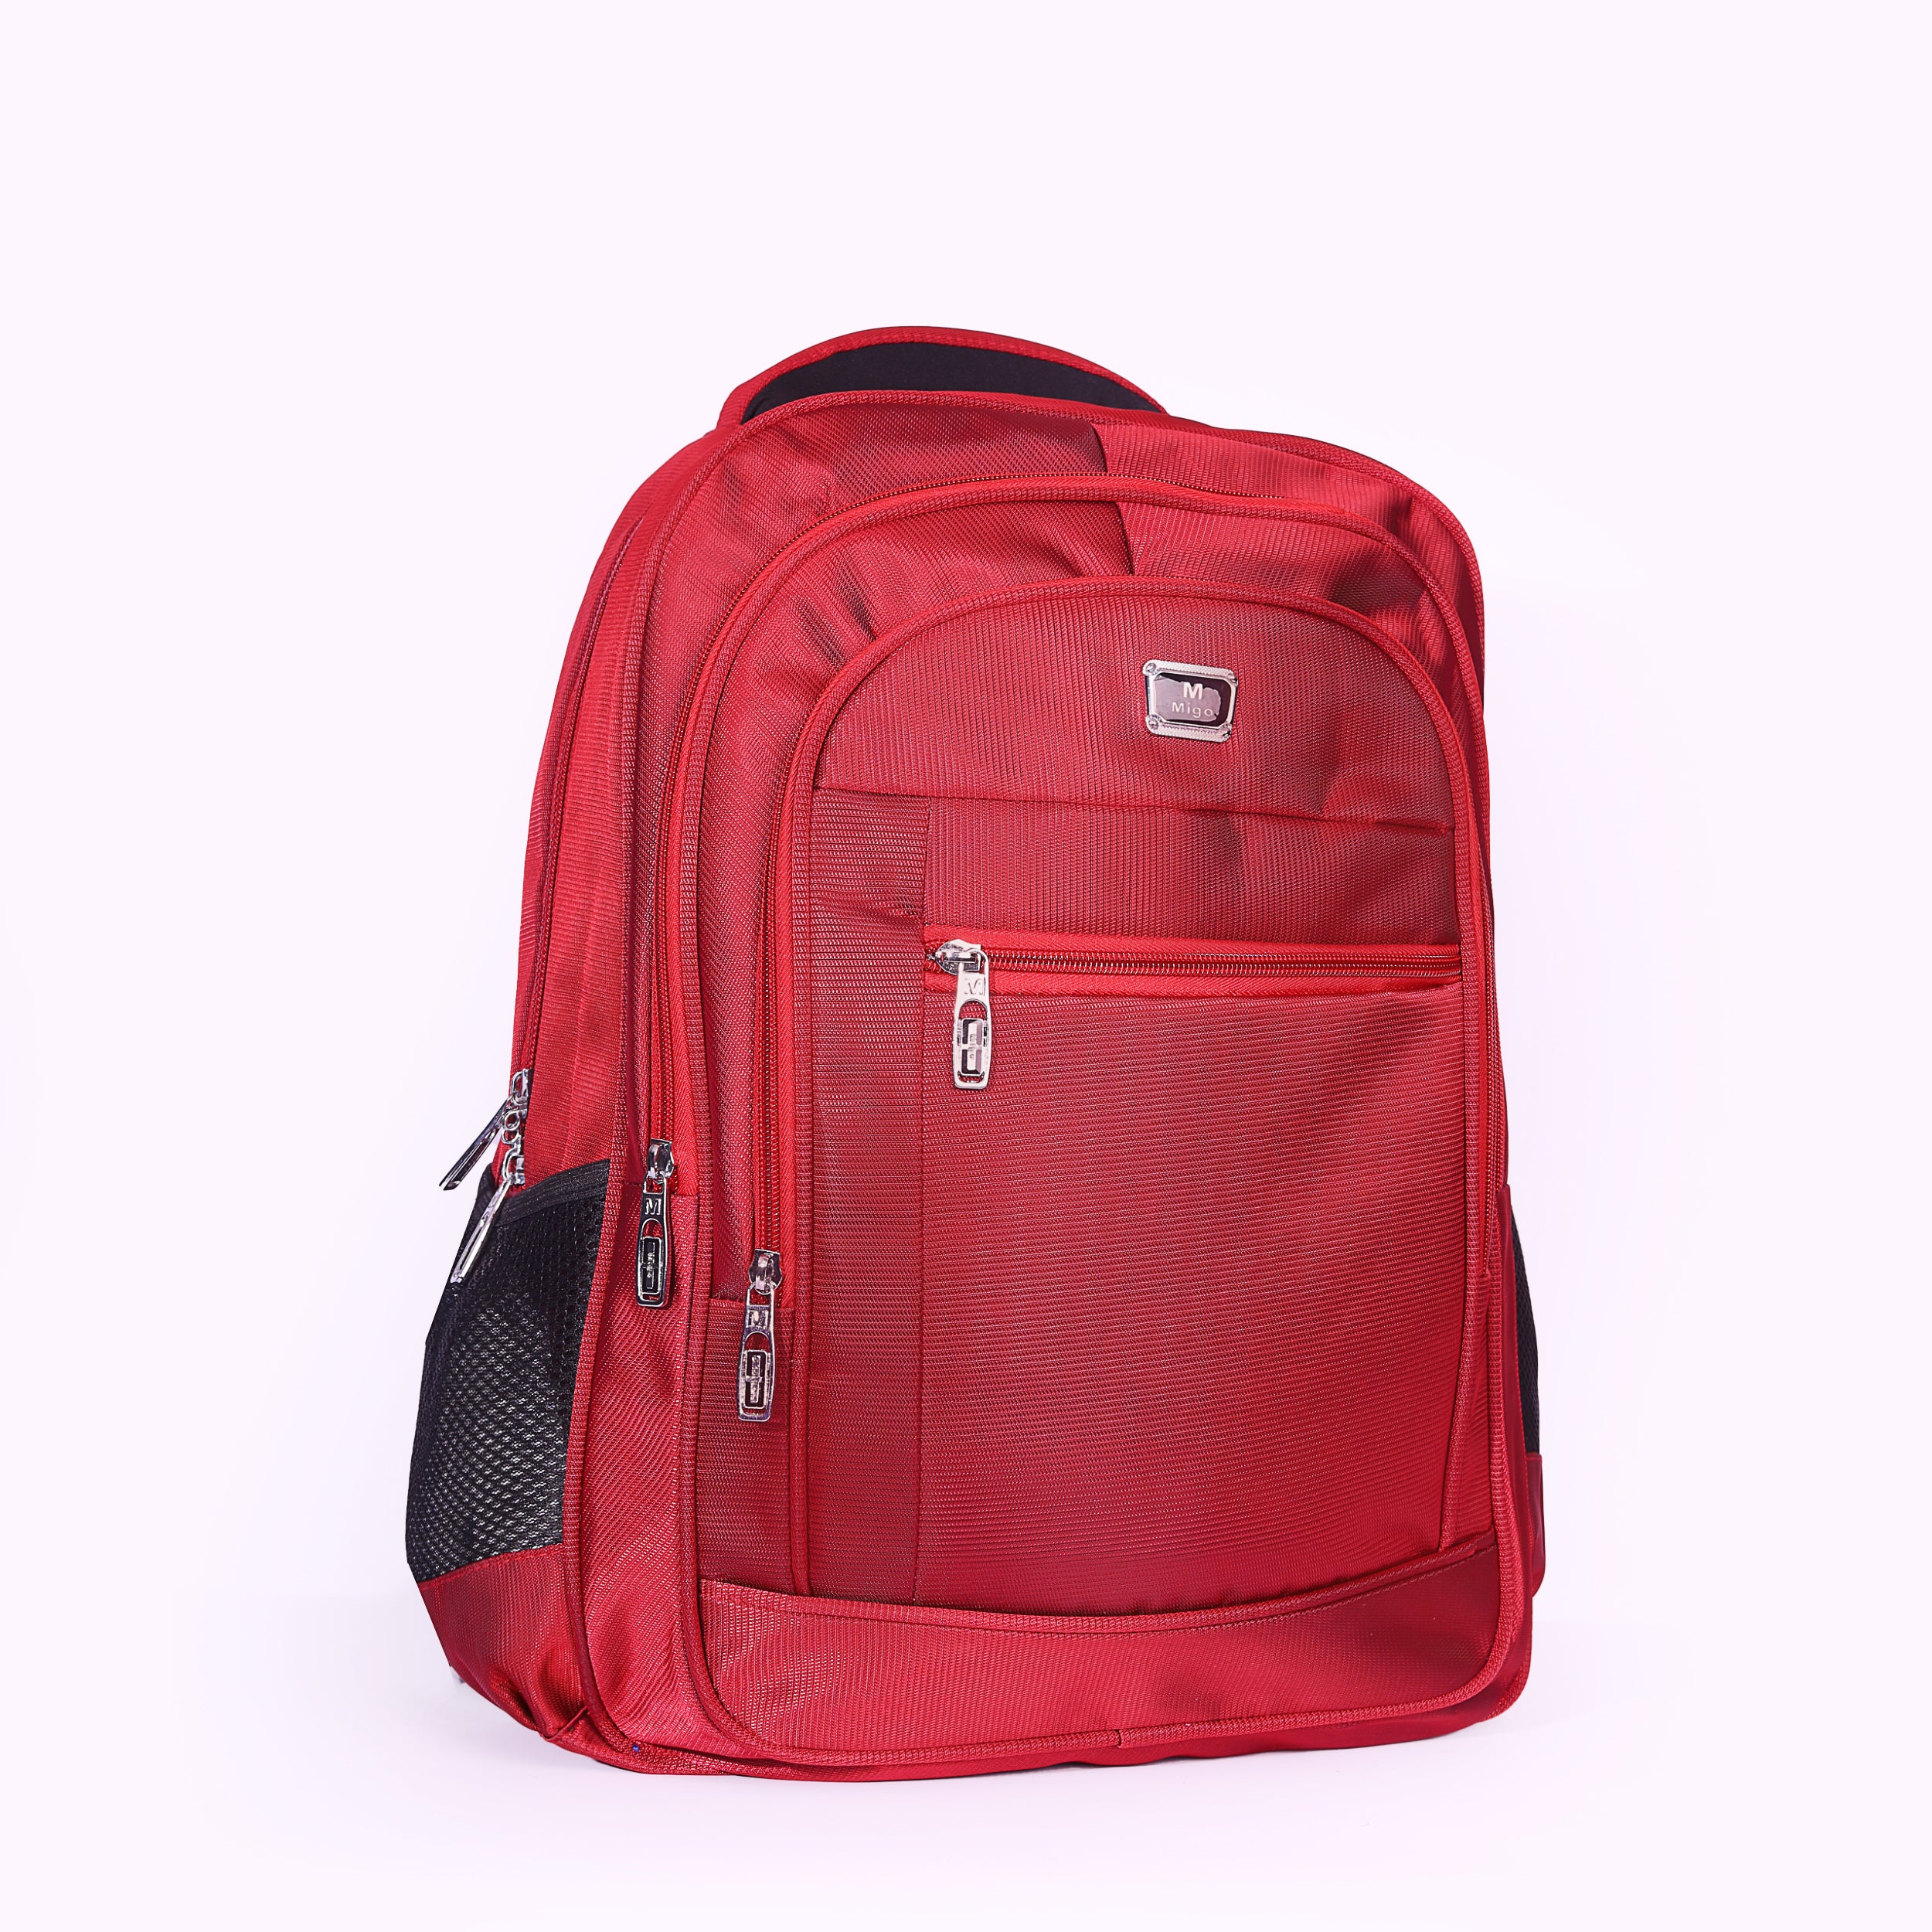 Basic VI School Bag For Teens 16 INCH